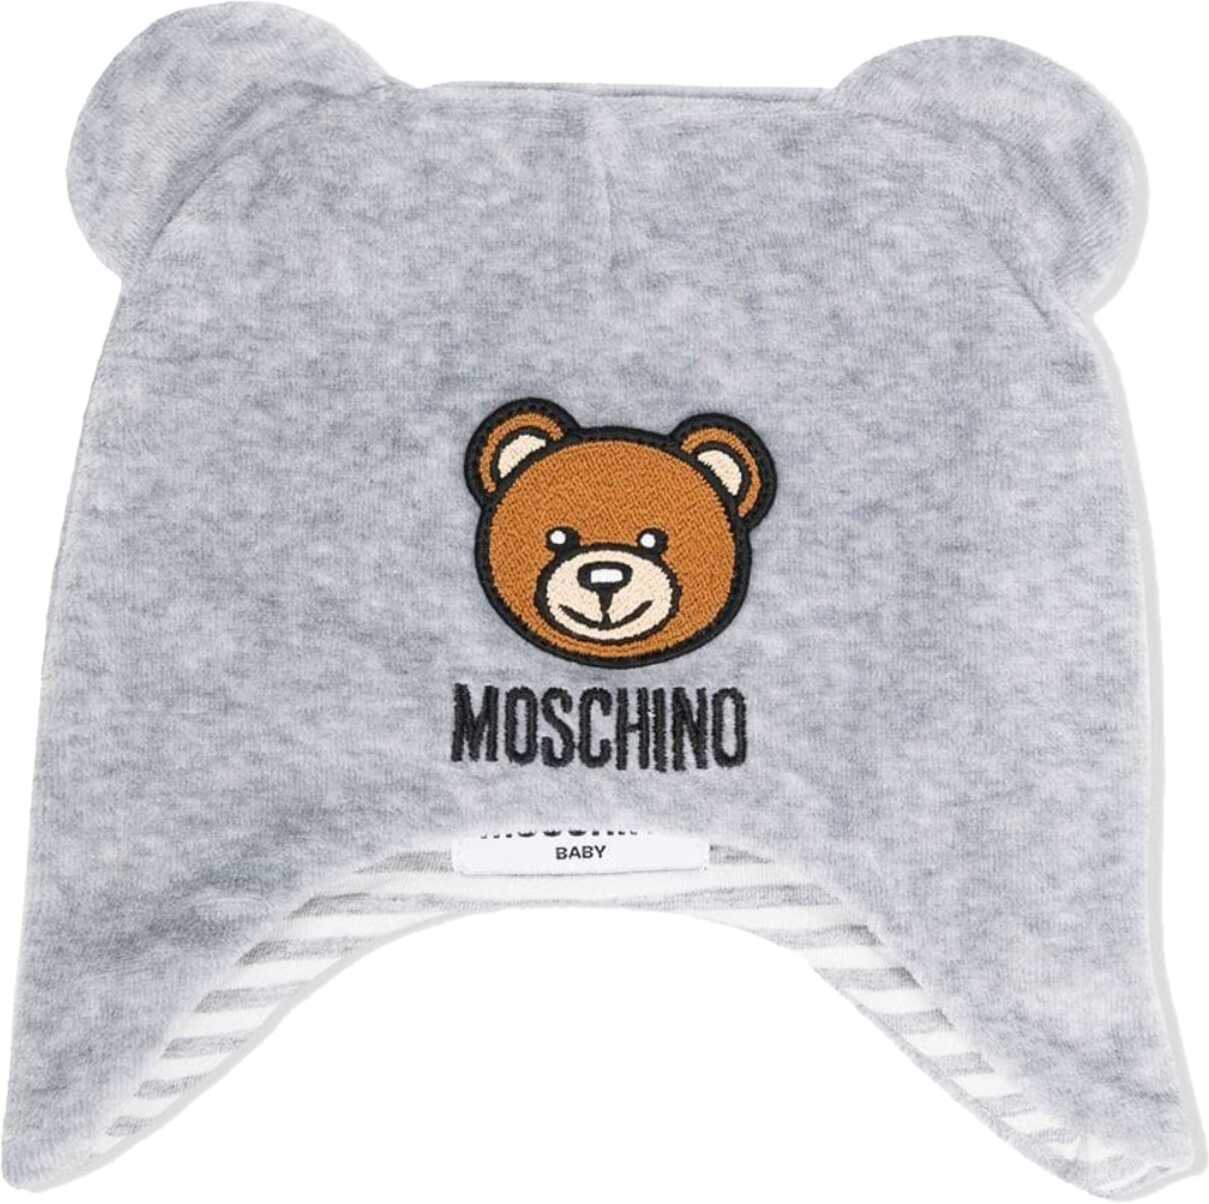 Moschino Teddy Bear Hat With Gift Box GREY